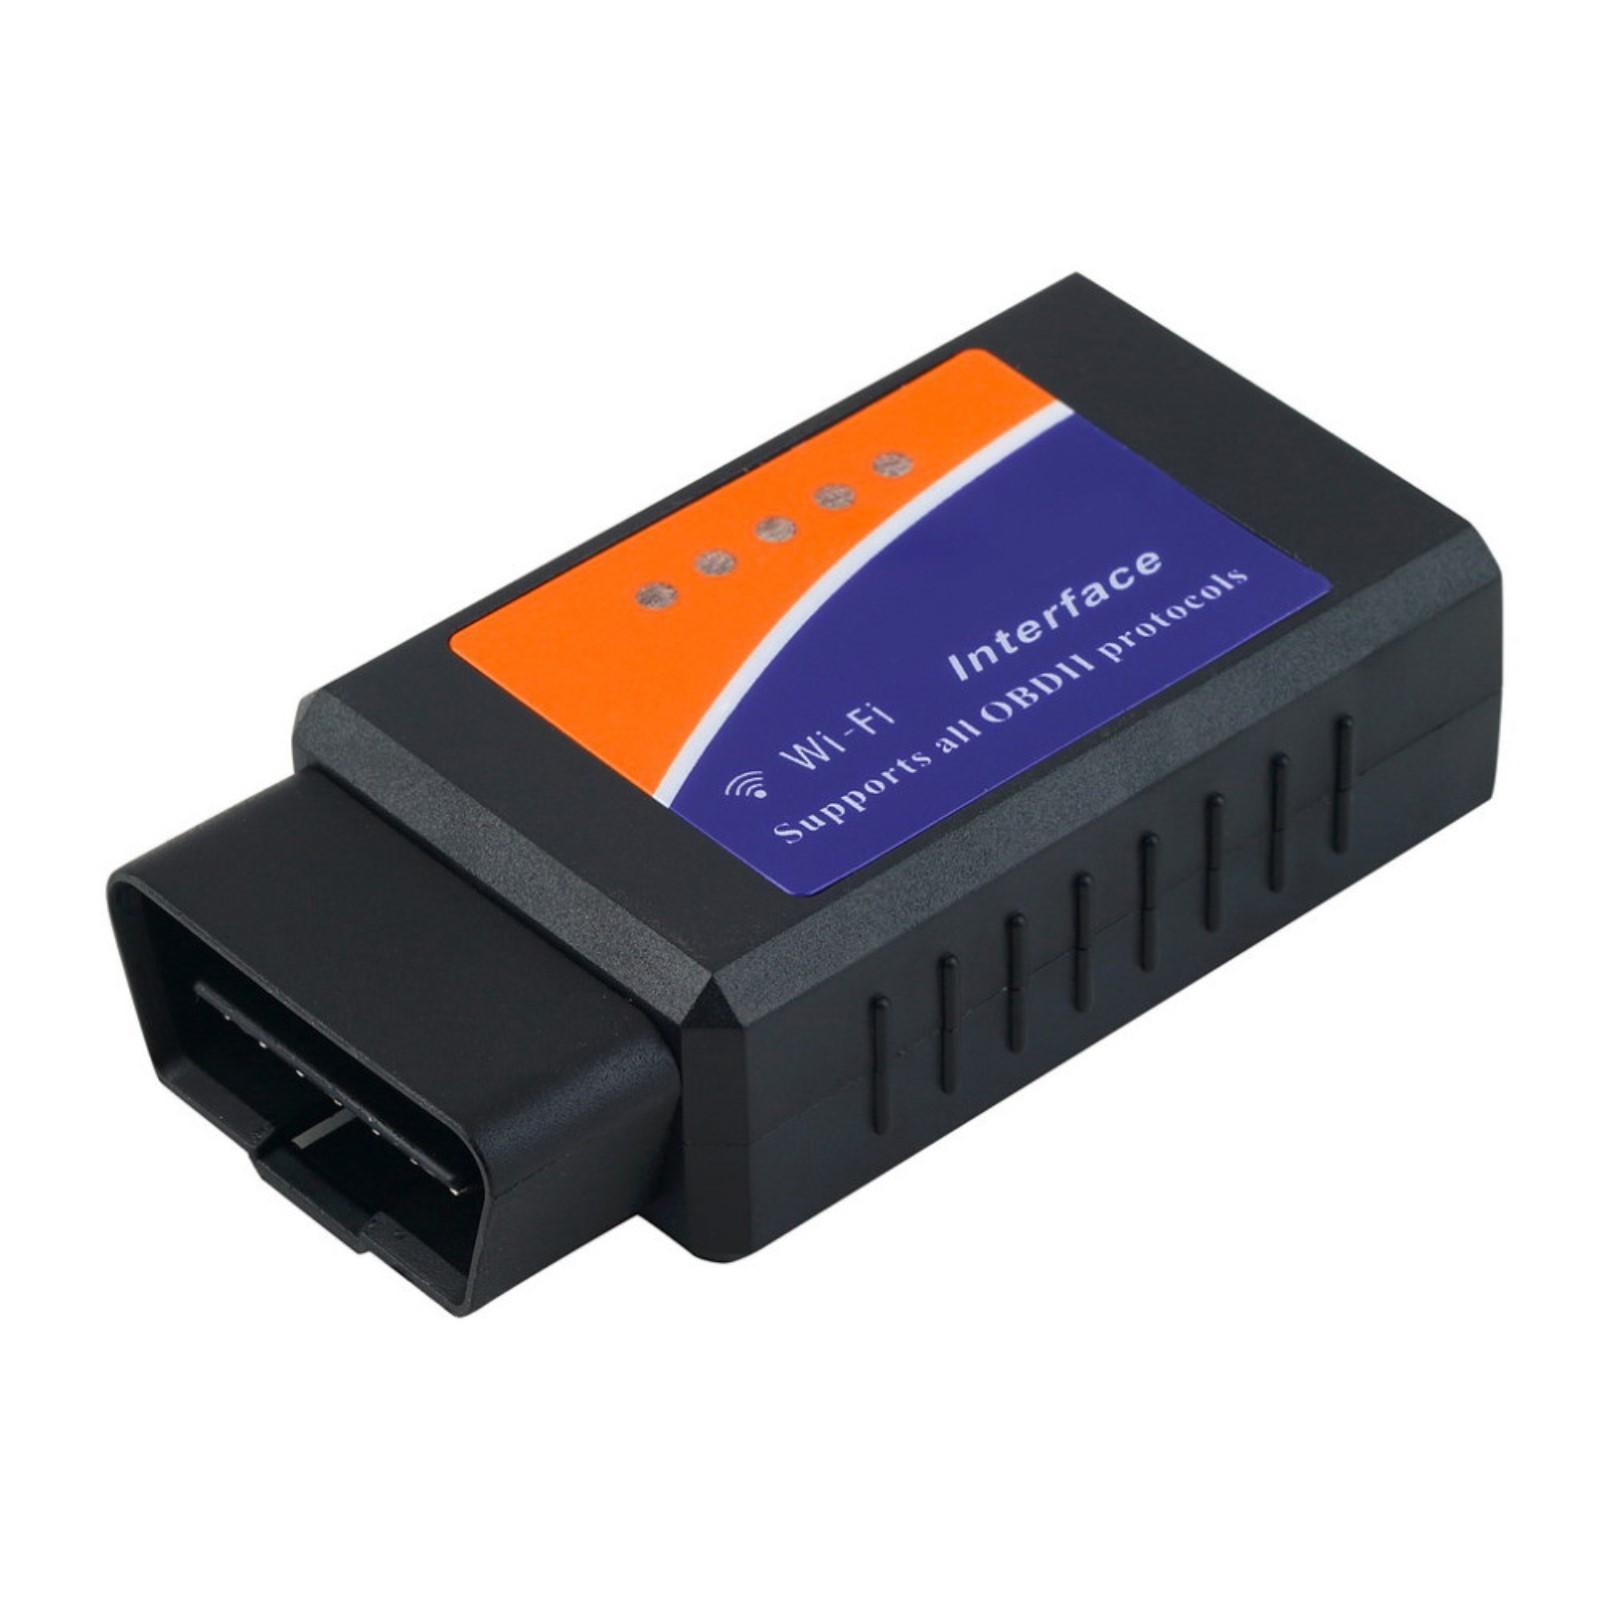 Сканер для автомобилей ваз. Obd2 elm327. Диагностический адаптер elm327 Bluetooth. OBD WIFI адаптер elm327. Адаптер диагностический OBD II elm327 v1.5.